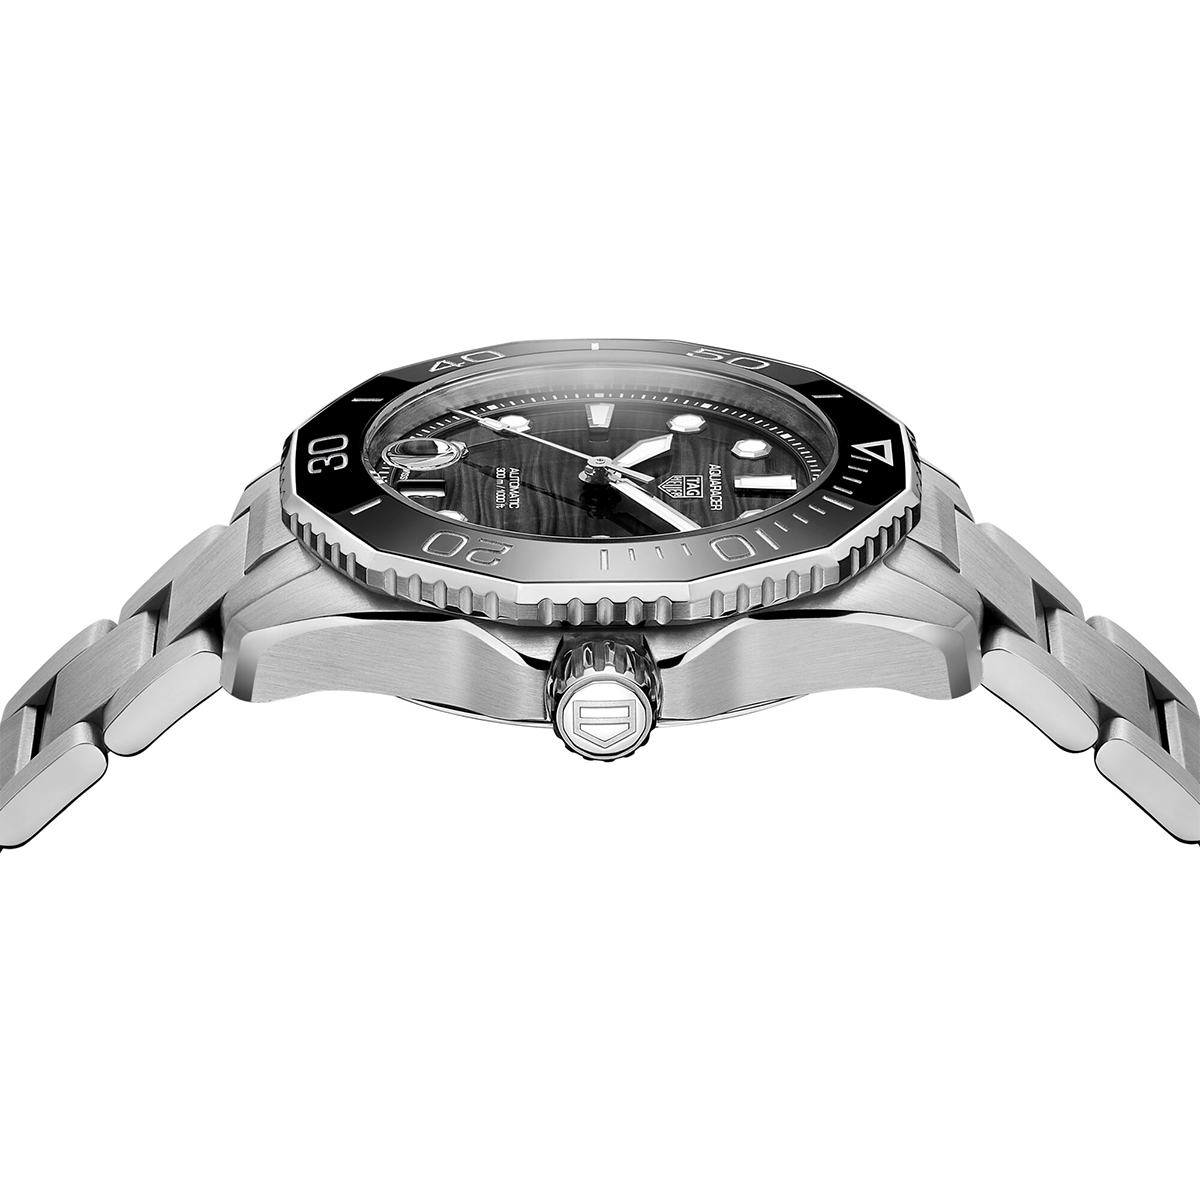 Aquaracer Professional 300 36mm Steel Automatic Watch